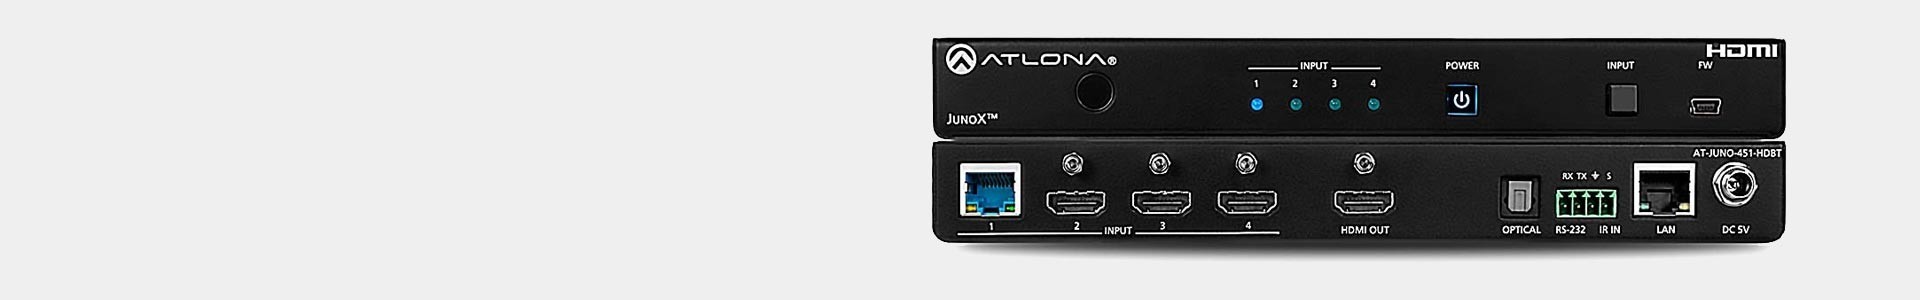 Atlona video switchers - Professional equipment - Avacab